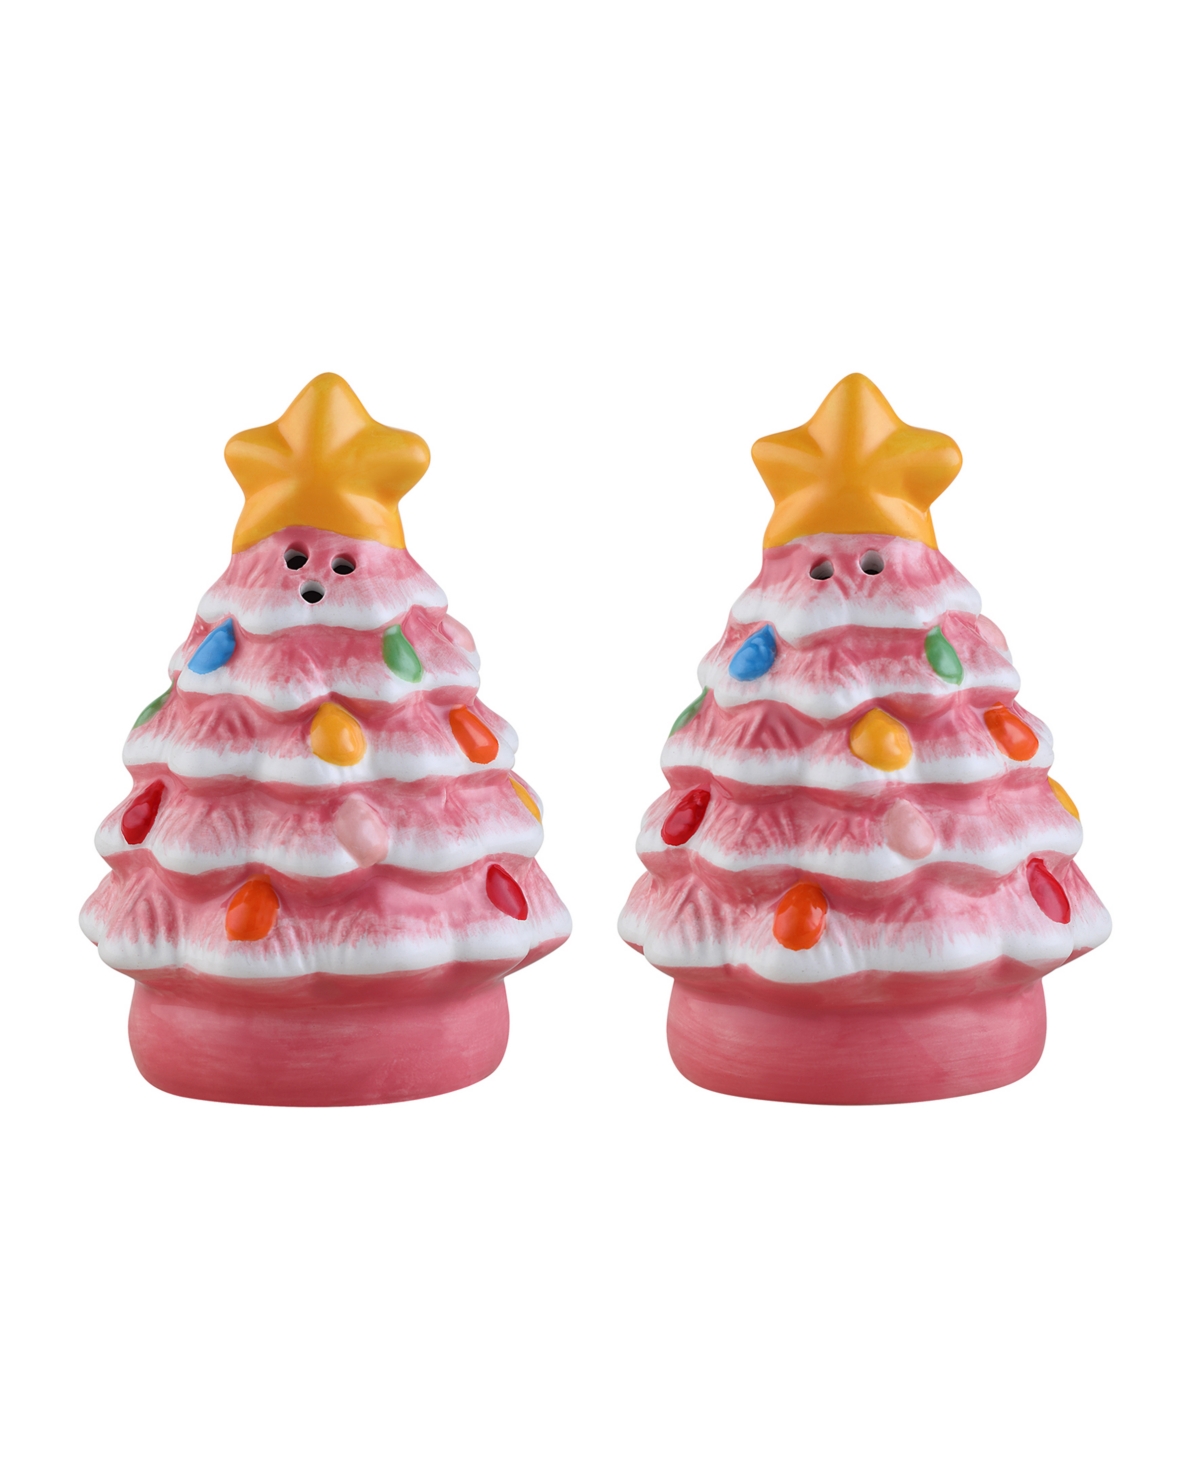 Mr. Christmas 3.75" Nostalgic Ceramic Tree Salt Pepper Shakers In Pink